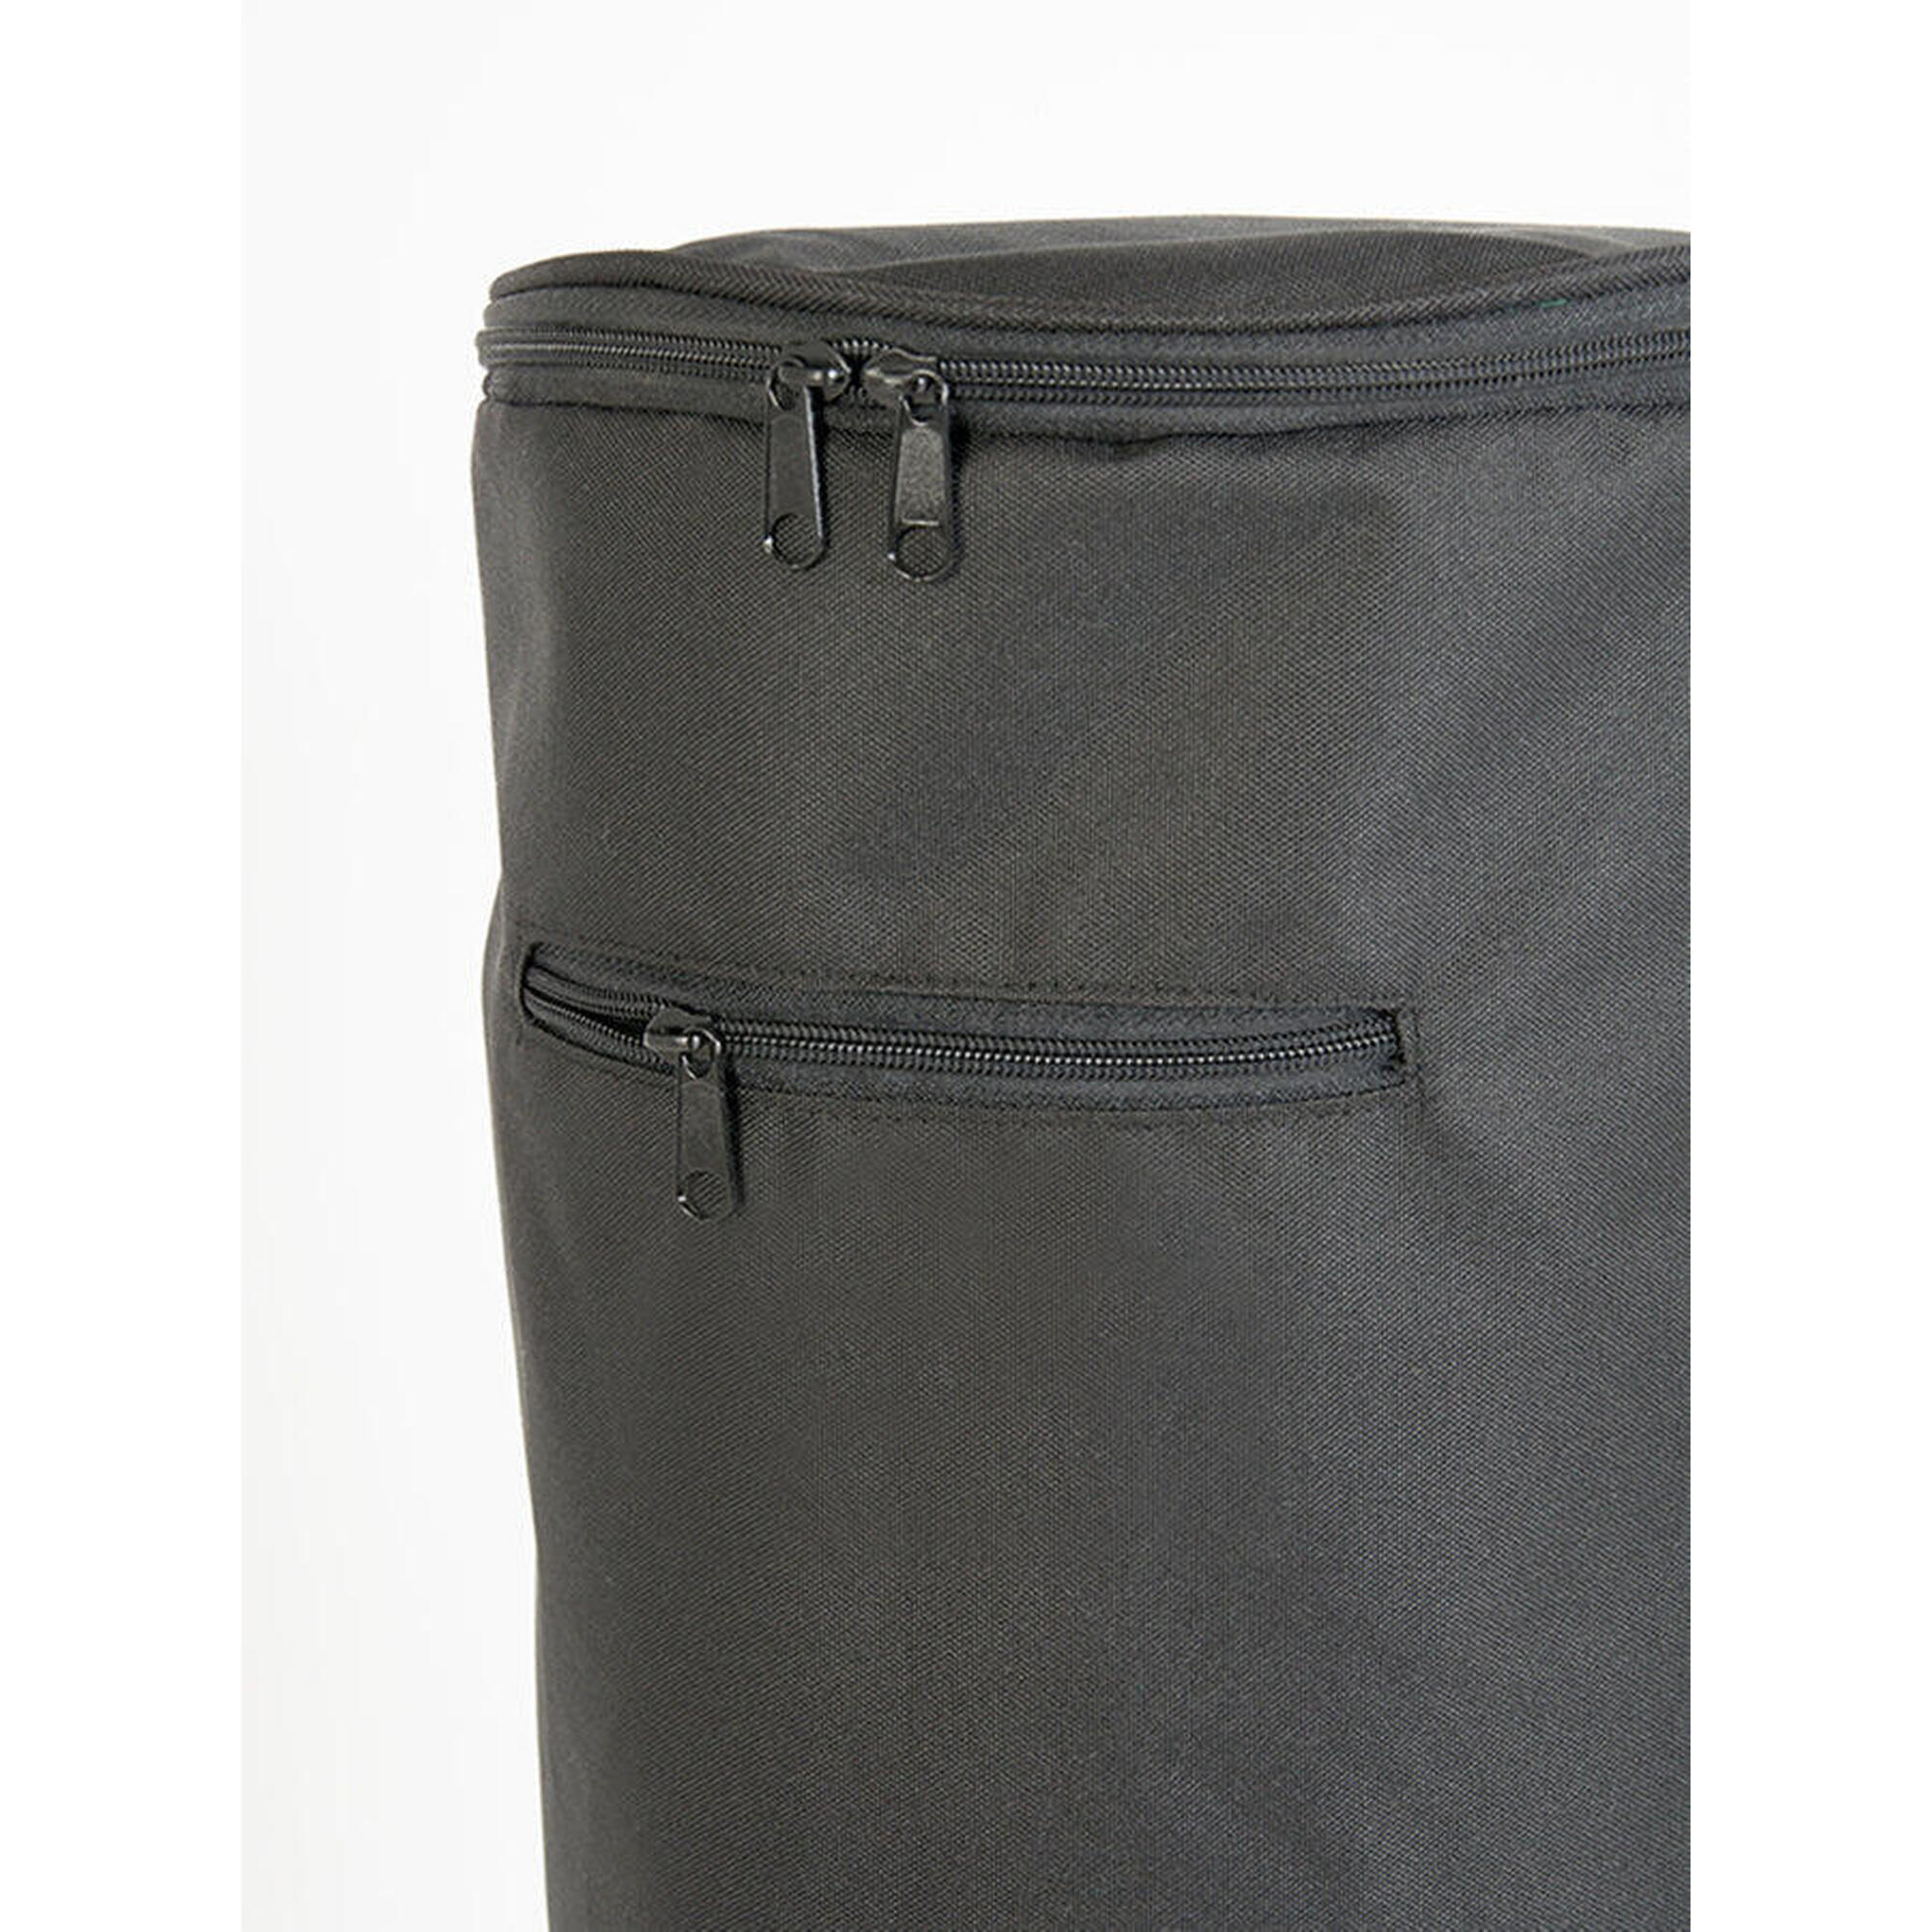 Yoga Studio Yoga Kit Bag - Top Loading - Black 3/3